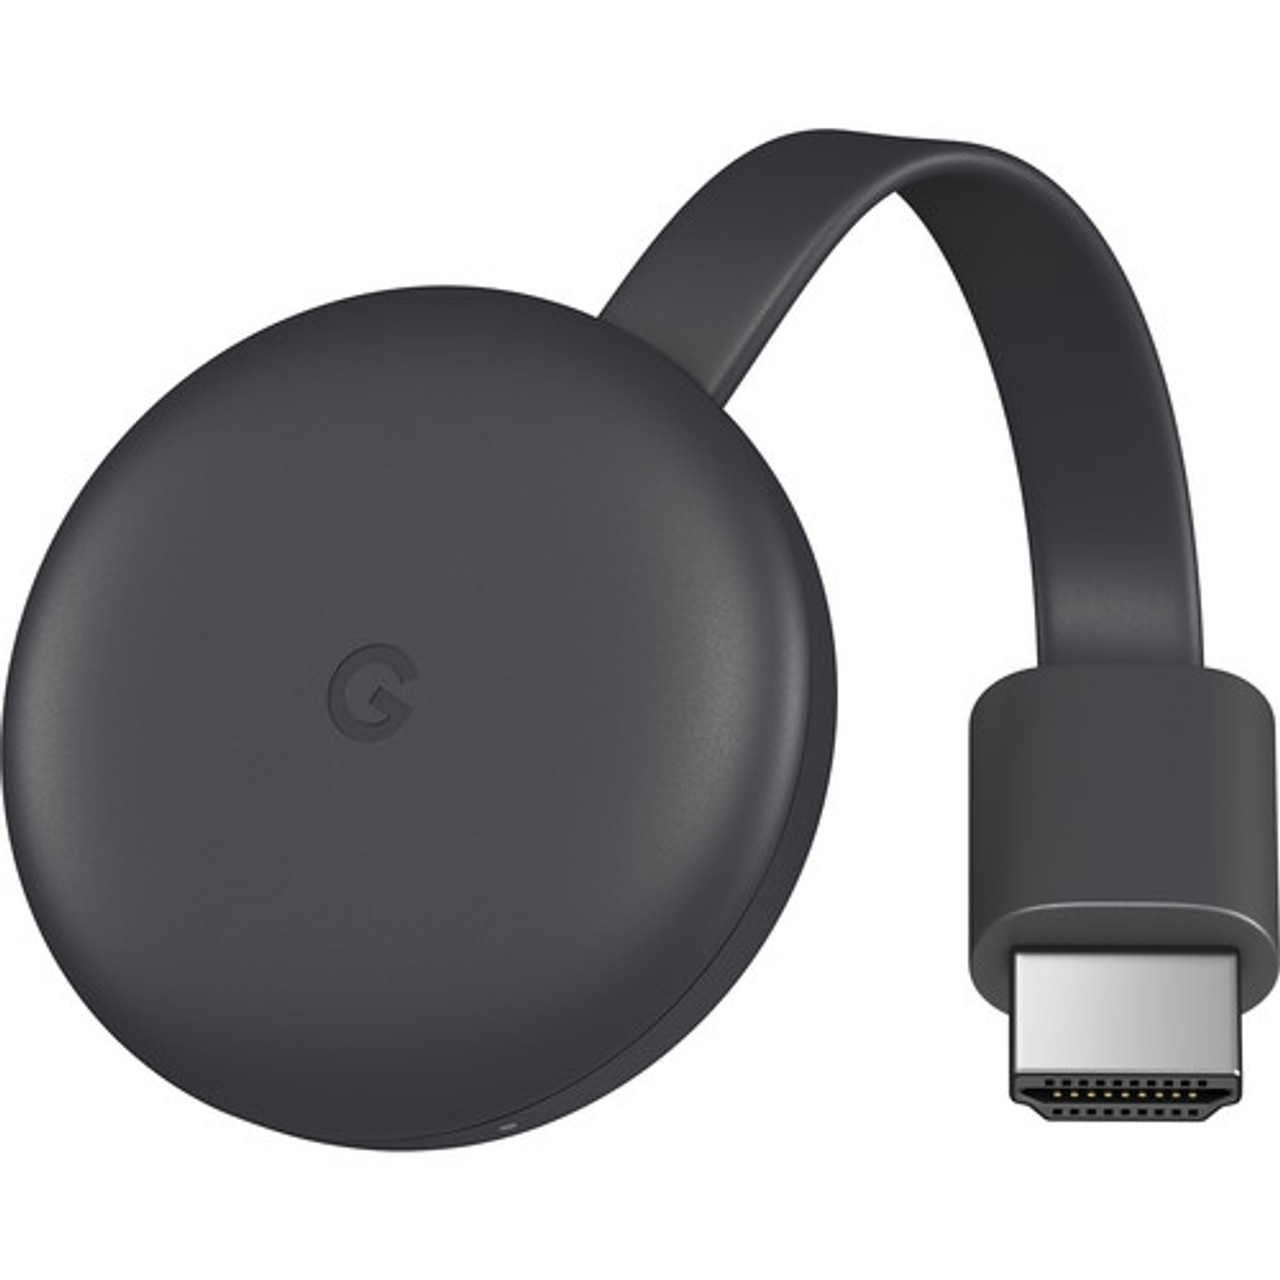 Google Chromecast, GA00439-US, AYOUB COMPUTERS